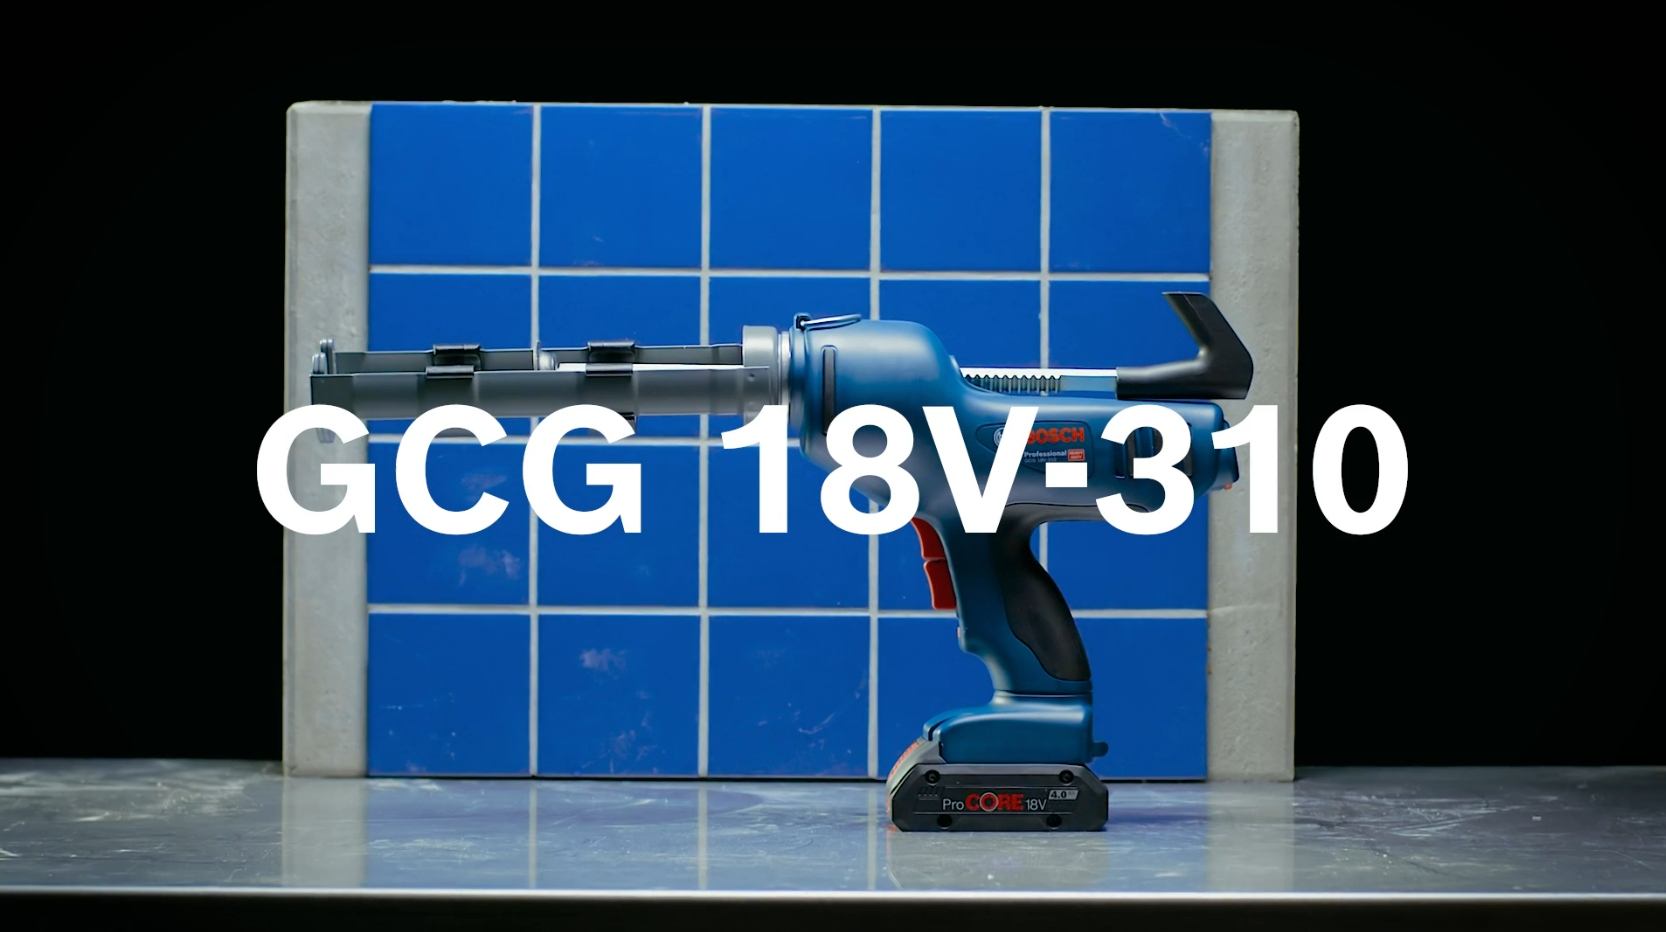 18V-310 bei GCG Professional Bosch Passiontec kaufen